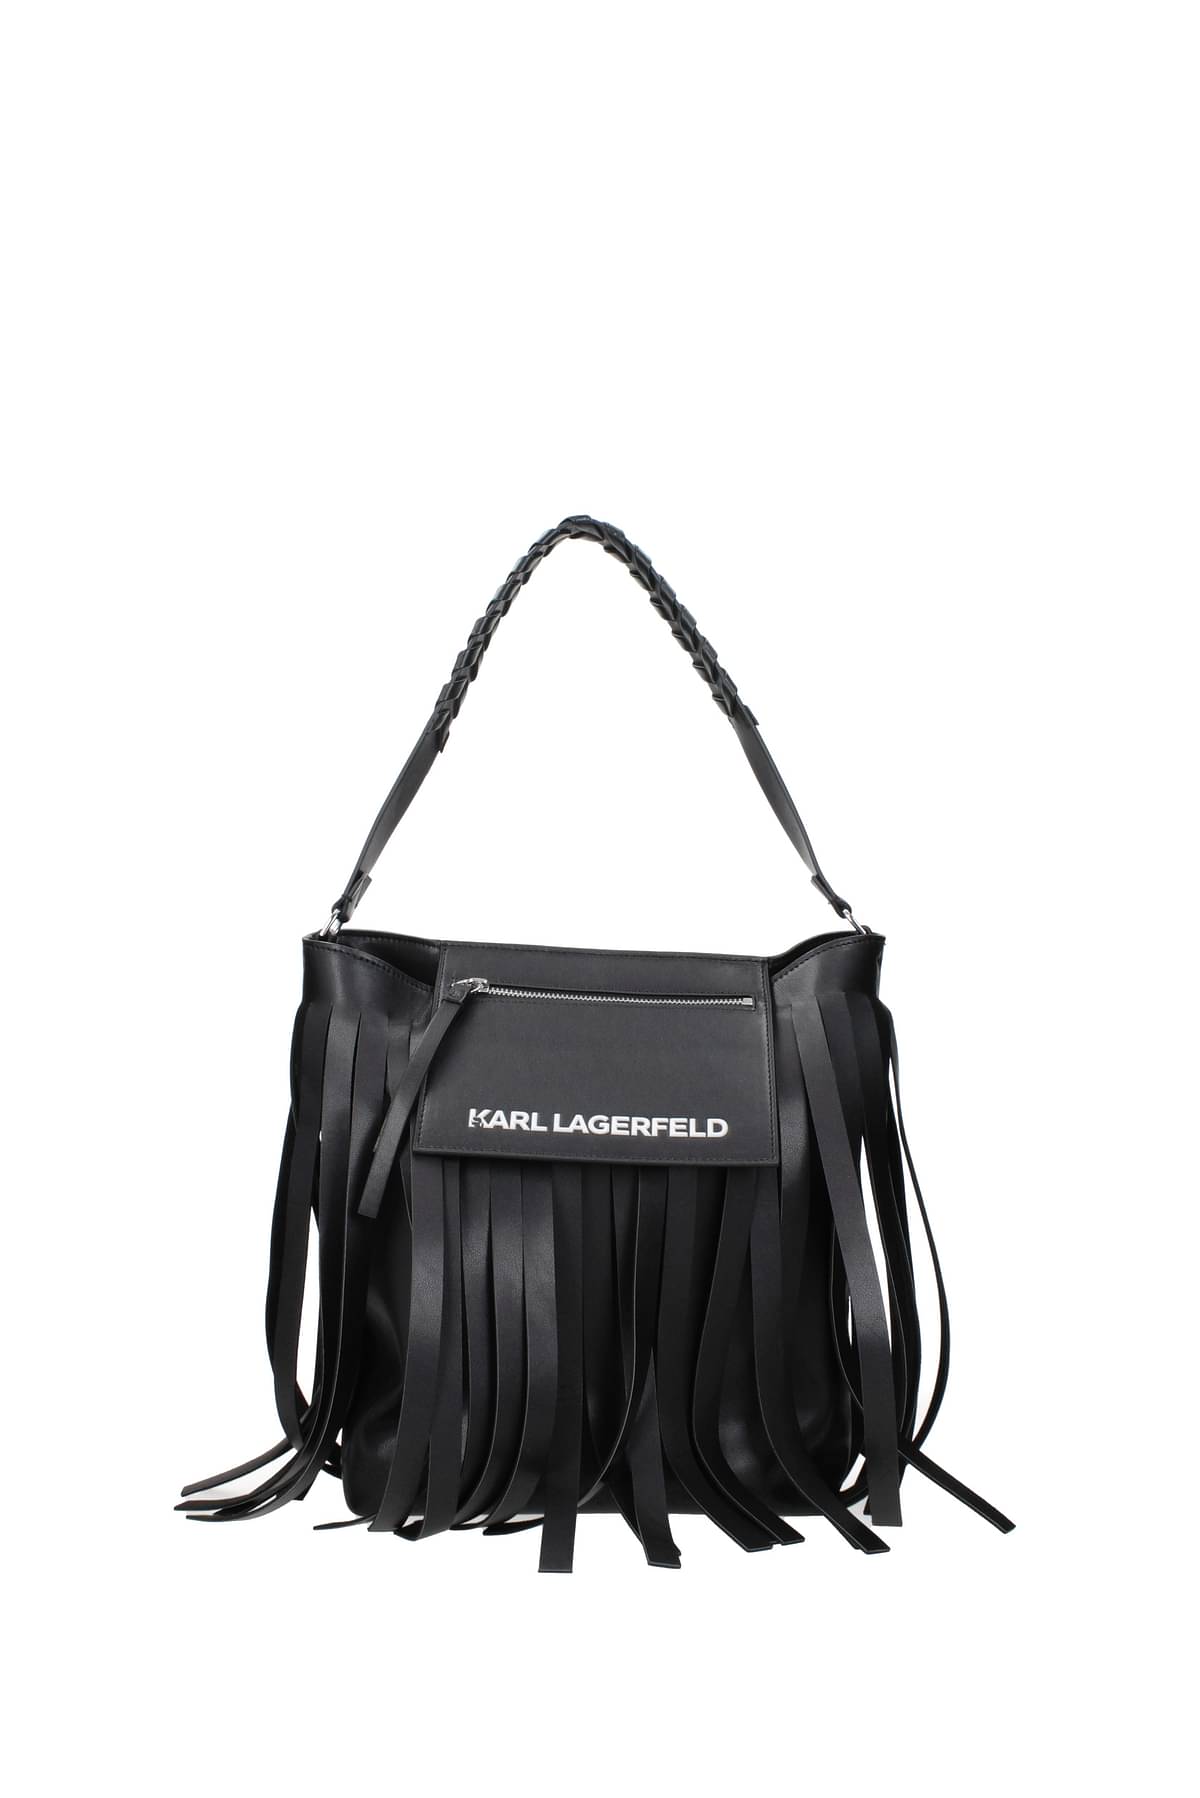 Handbags Karl Lagerfeld, Style code: 220w3029-a999